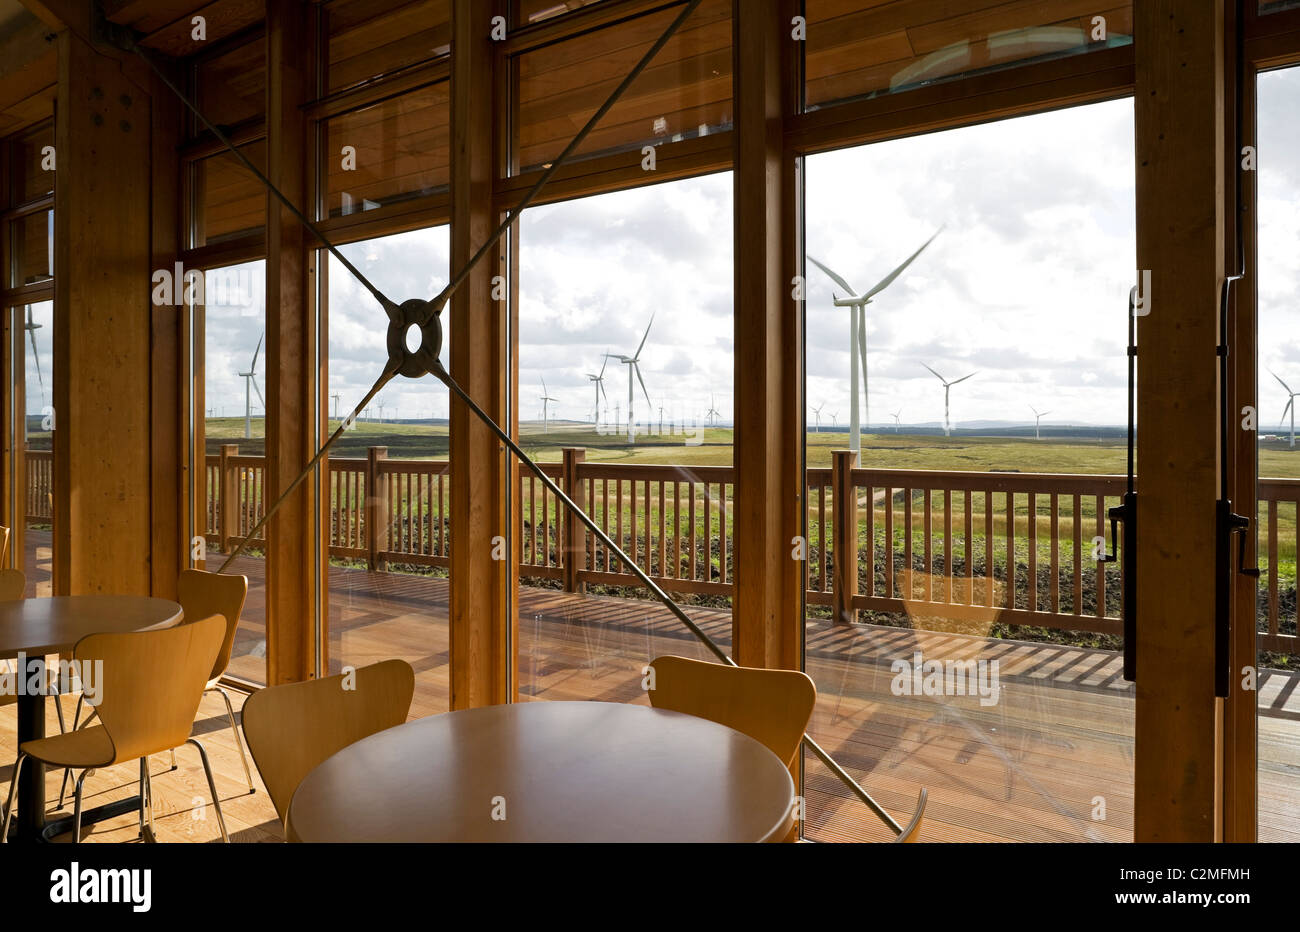 Whitelee Wind Farm, near Glasgow Stock Photo